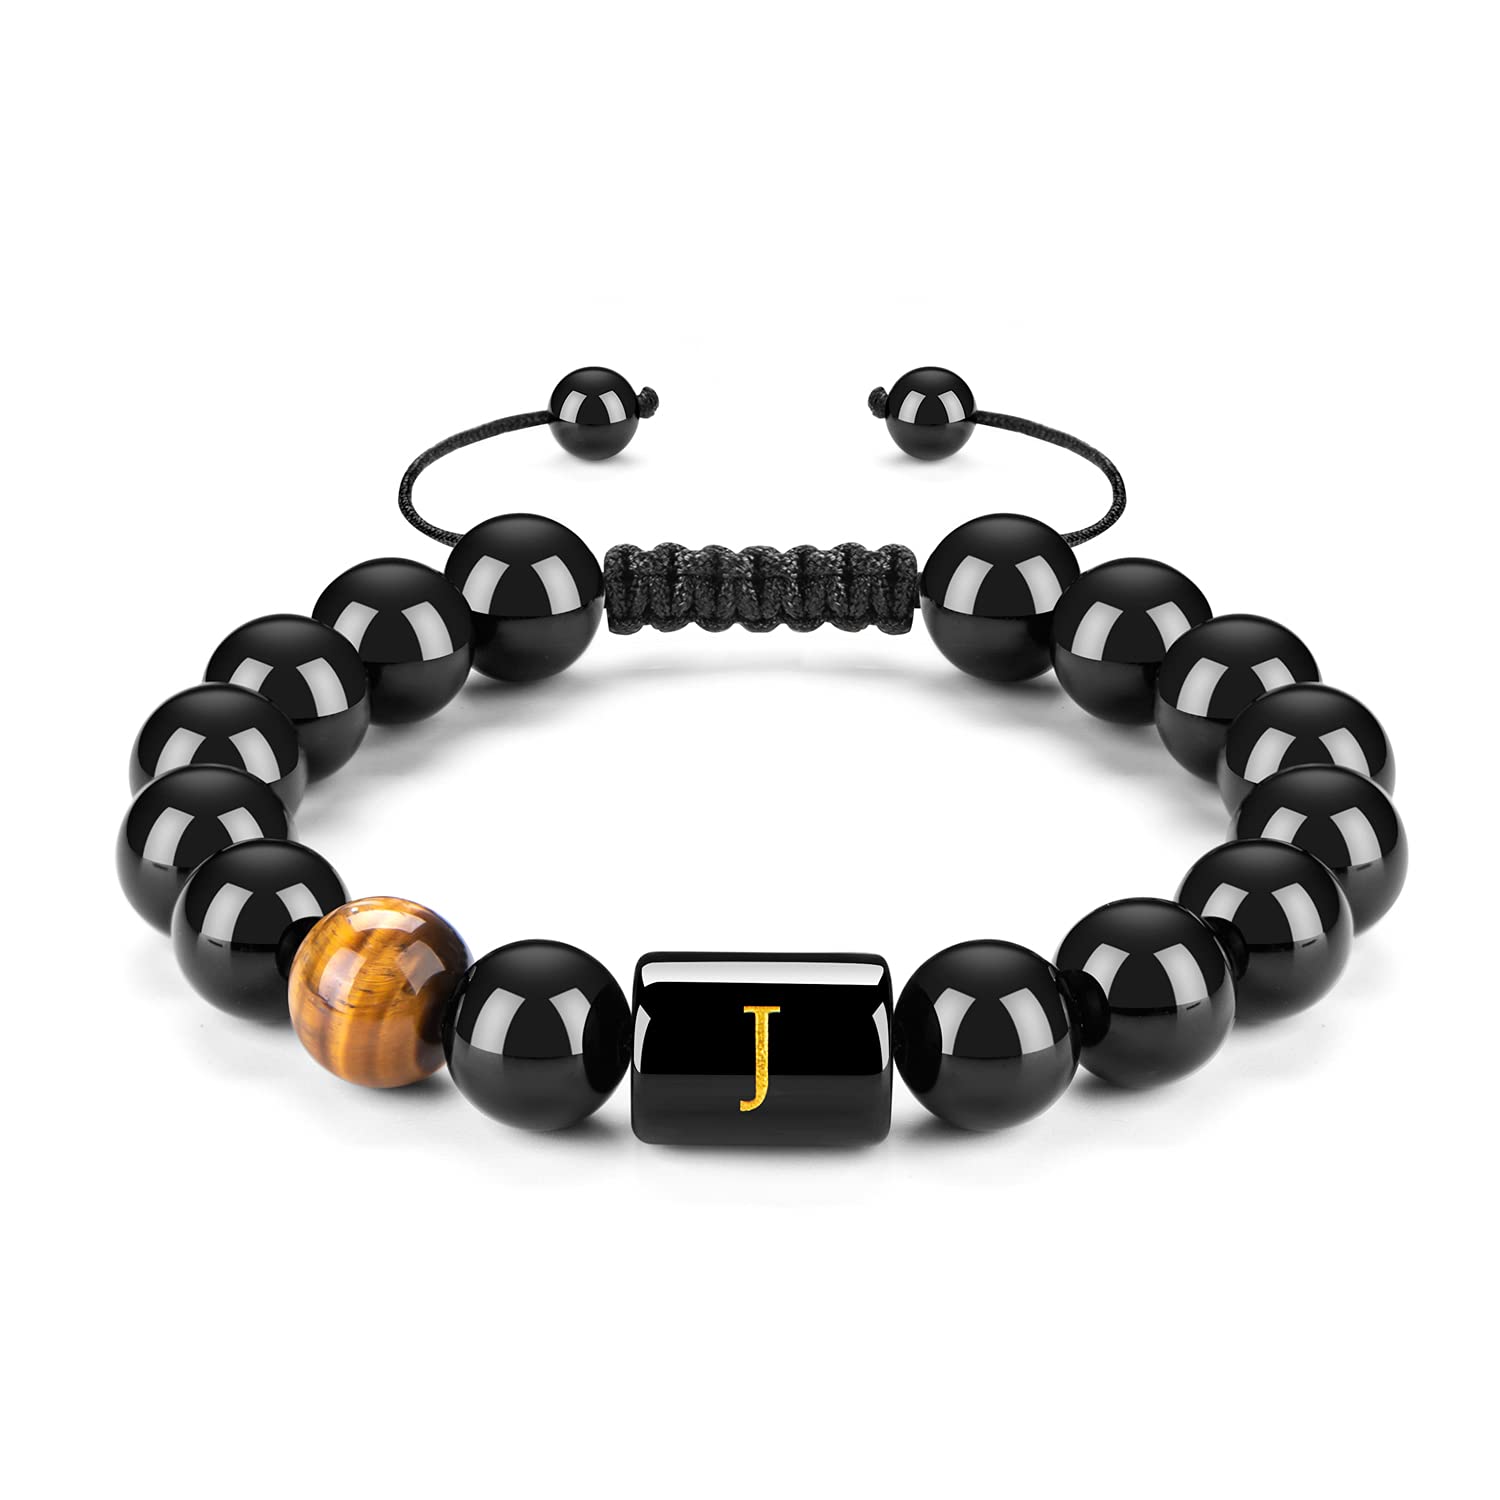 FRG Initials Bracelets for Men Letter Link Handmade Natural Black Onyx Tiger Eye Stone Beads Braided Rope Meaningful Bracelet 